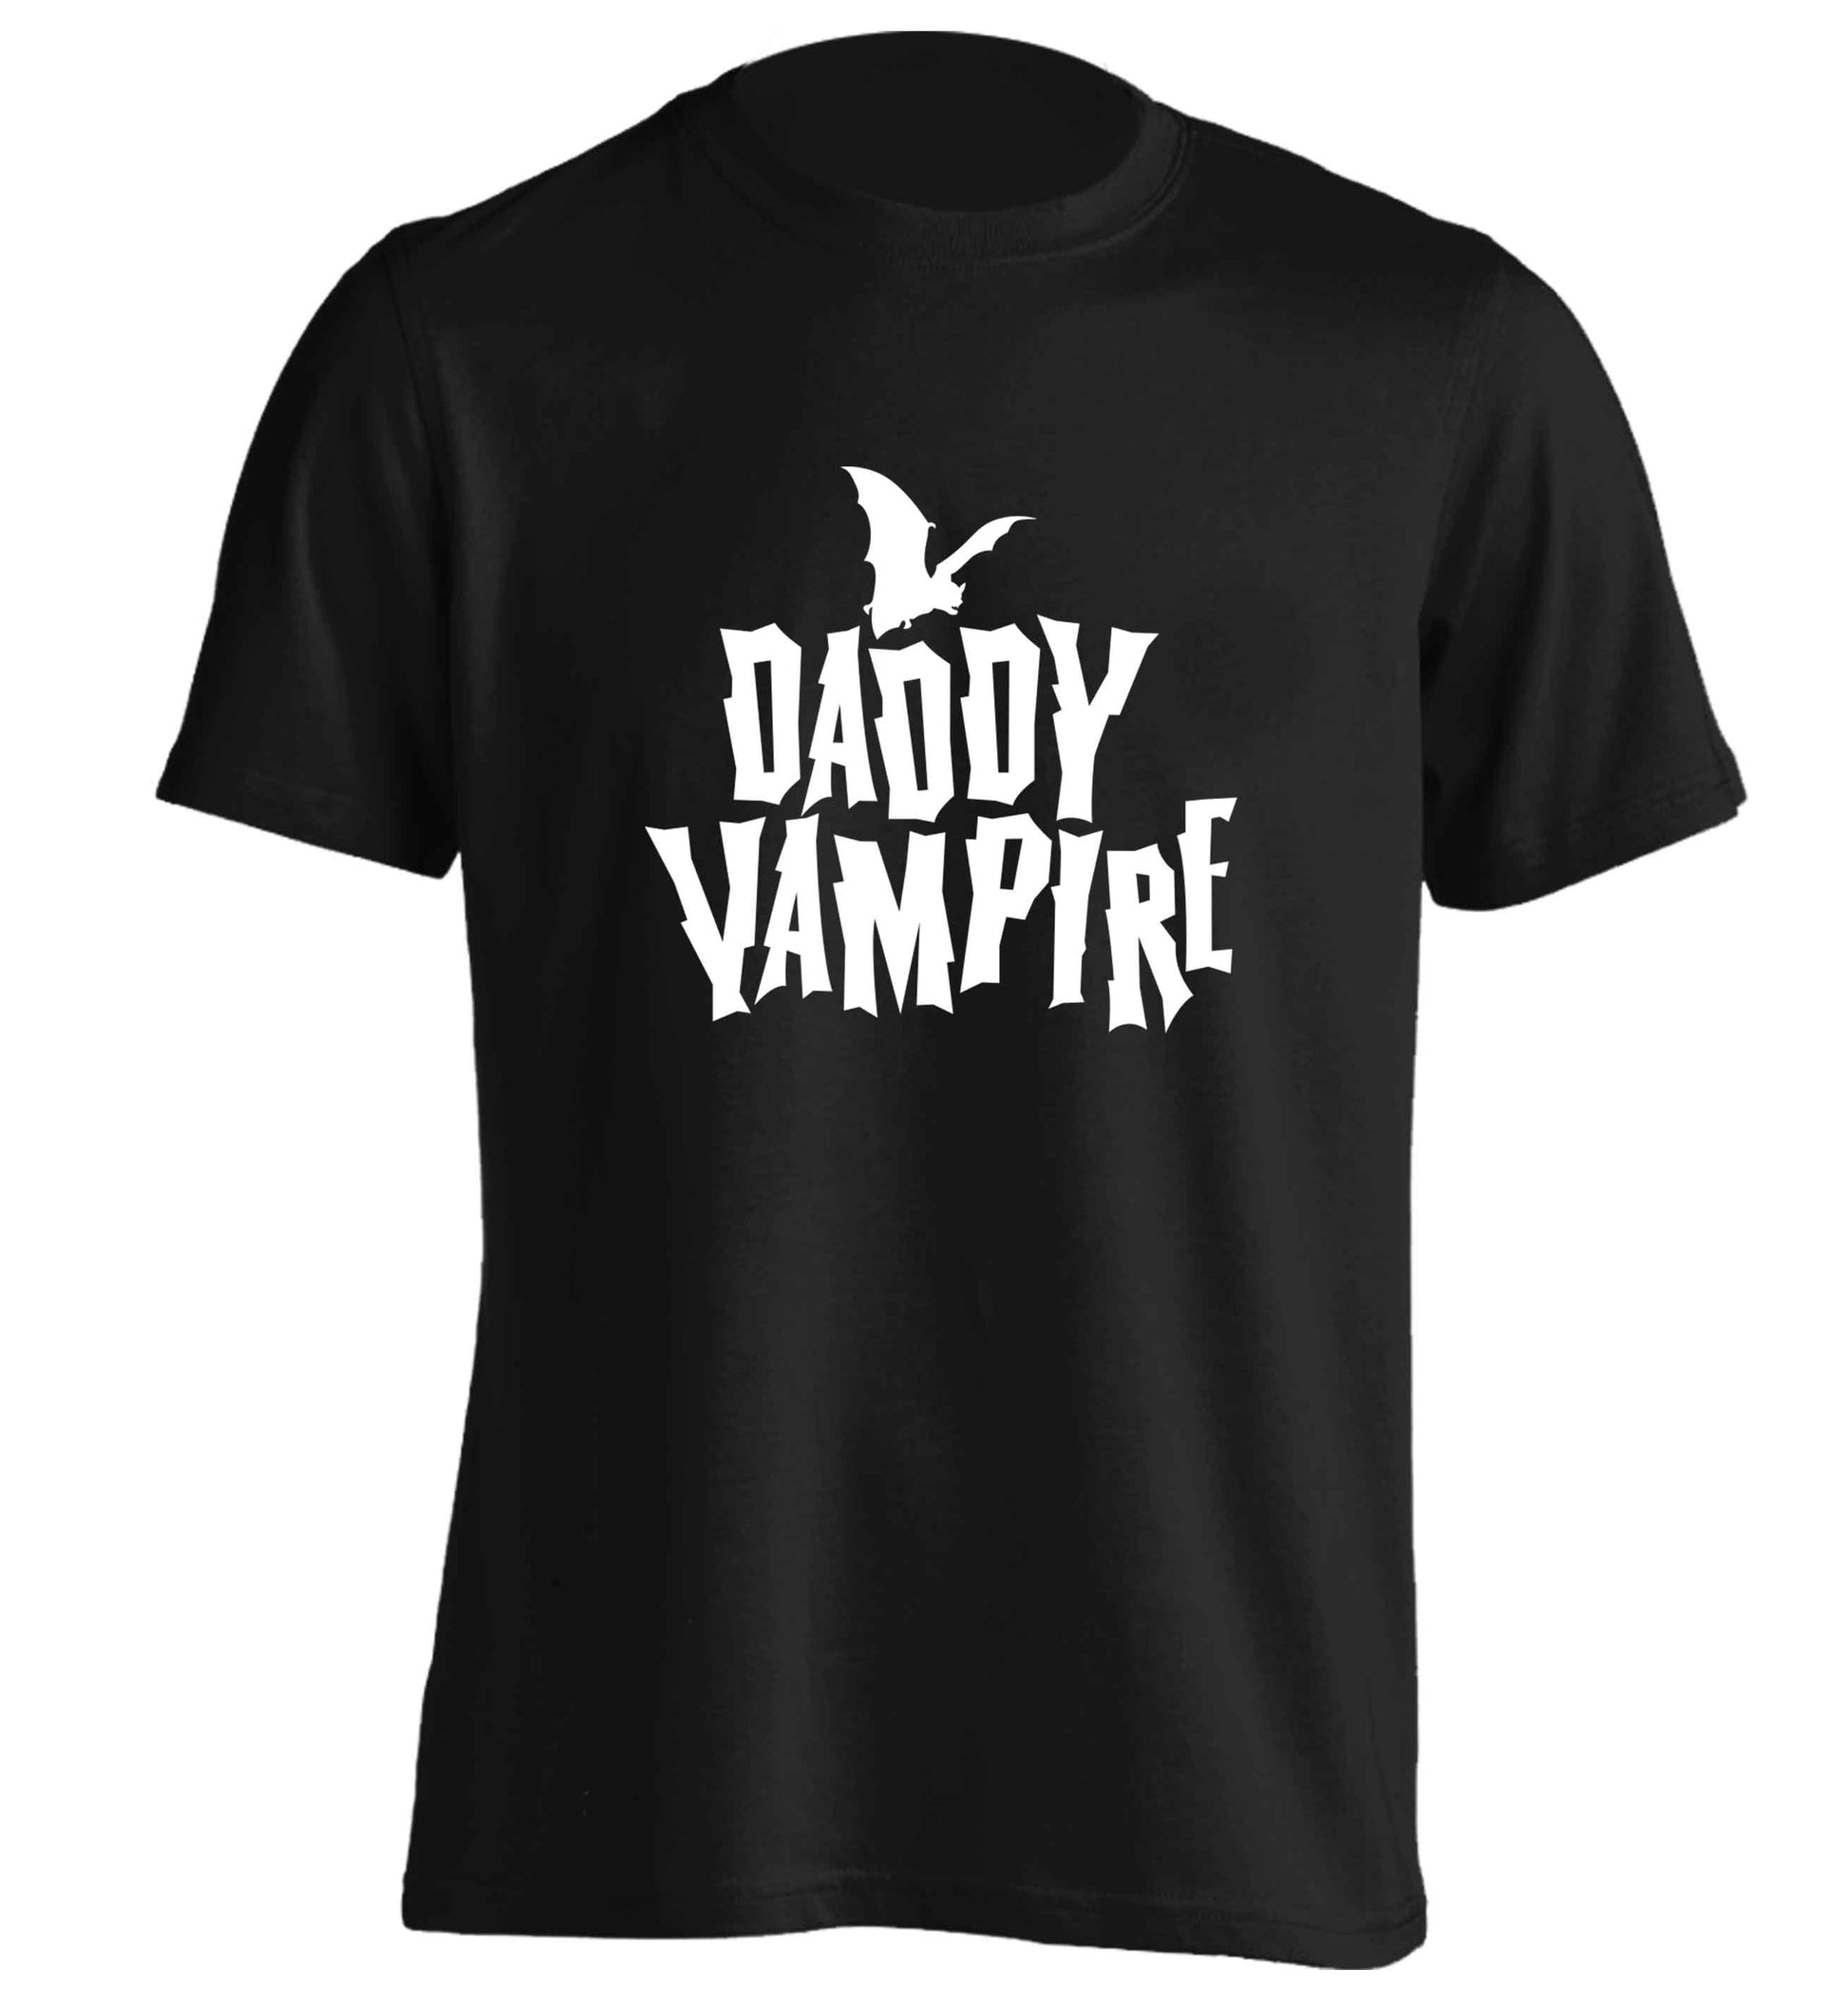 Daddy vampire adults unisex black Tshirt 2XL